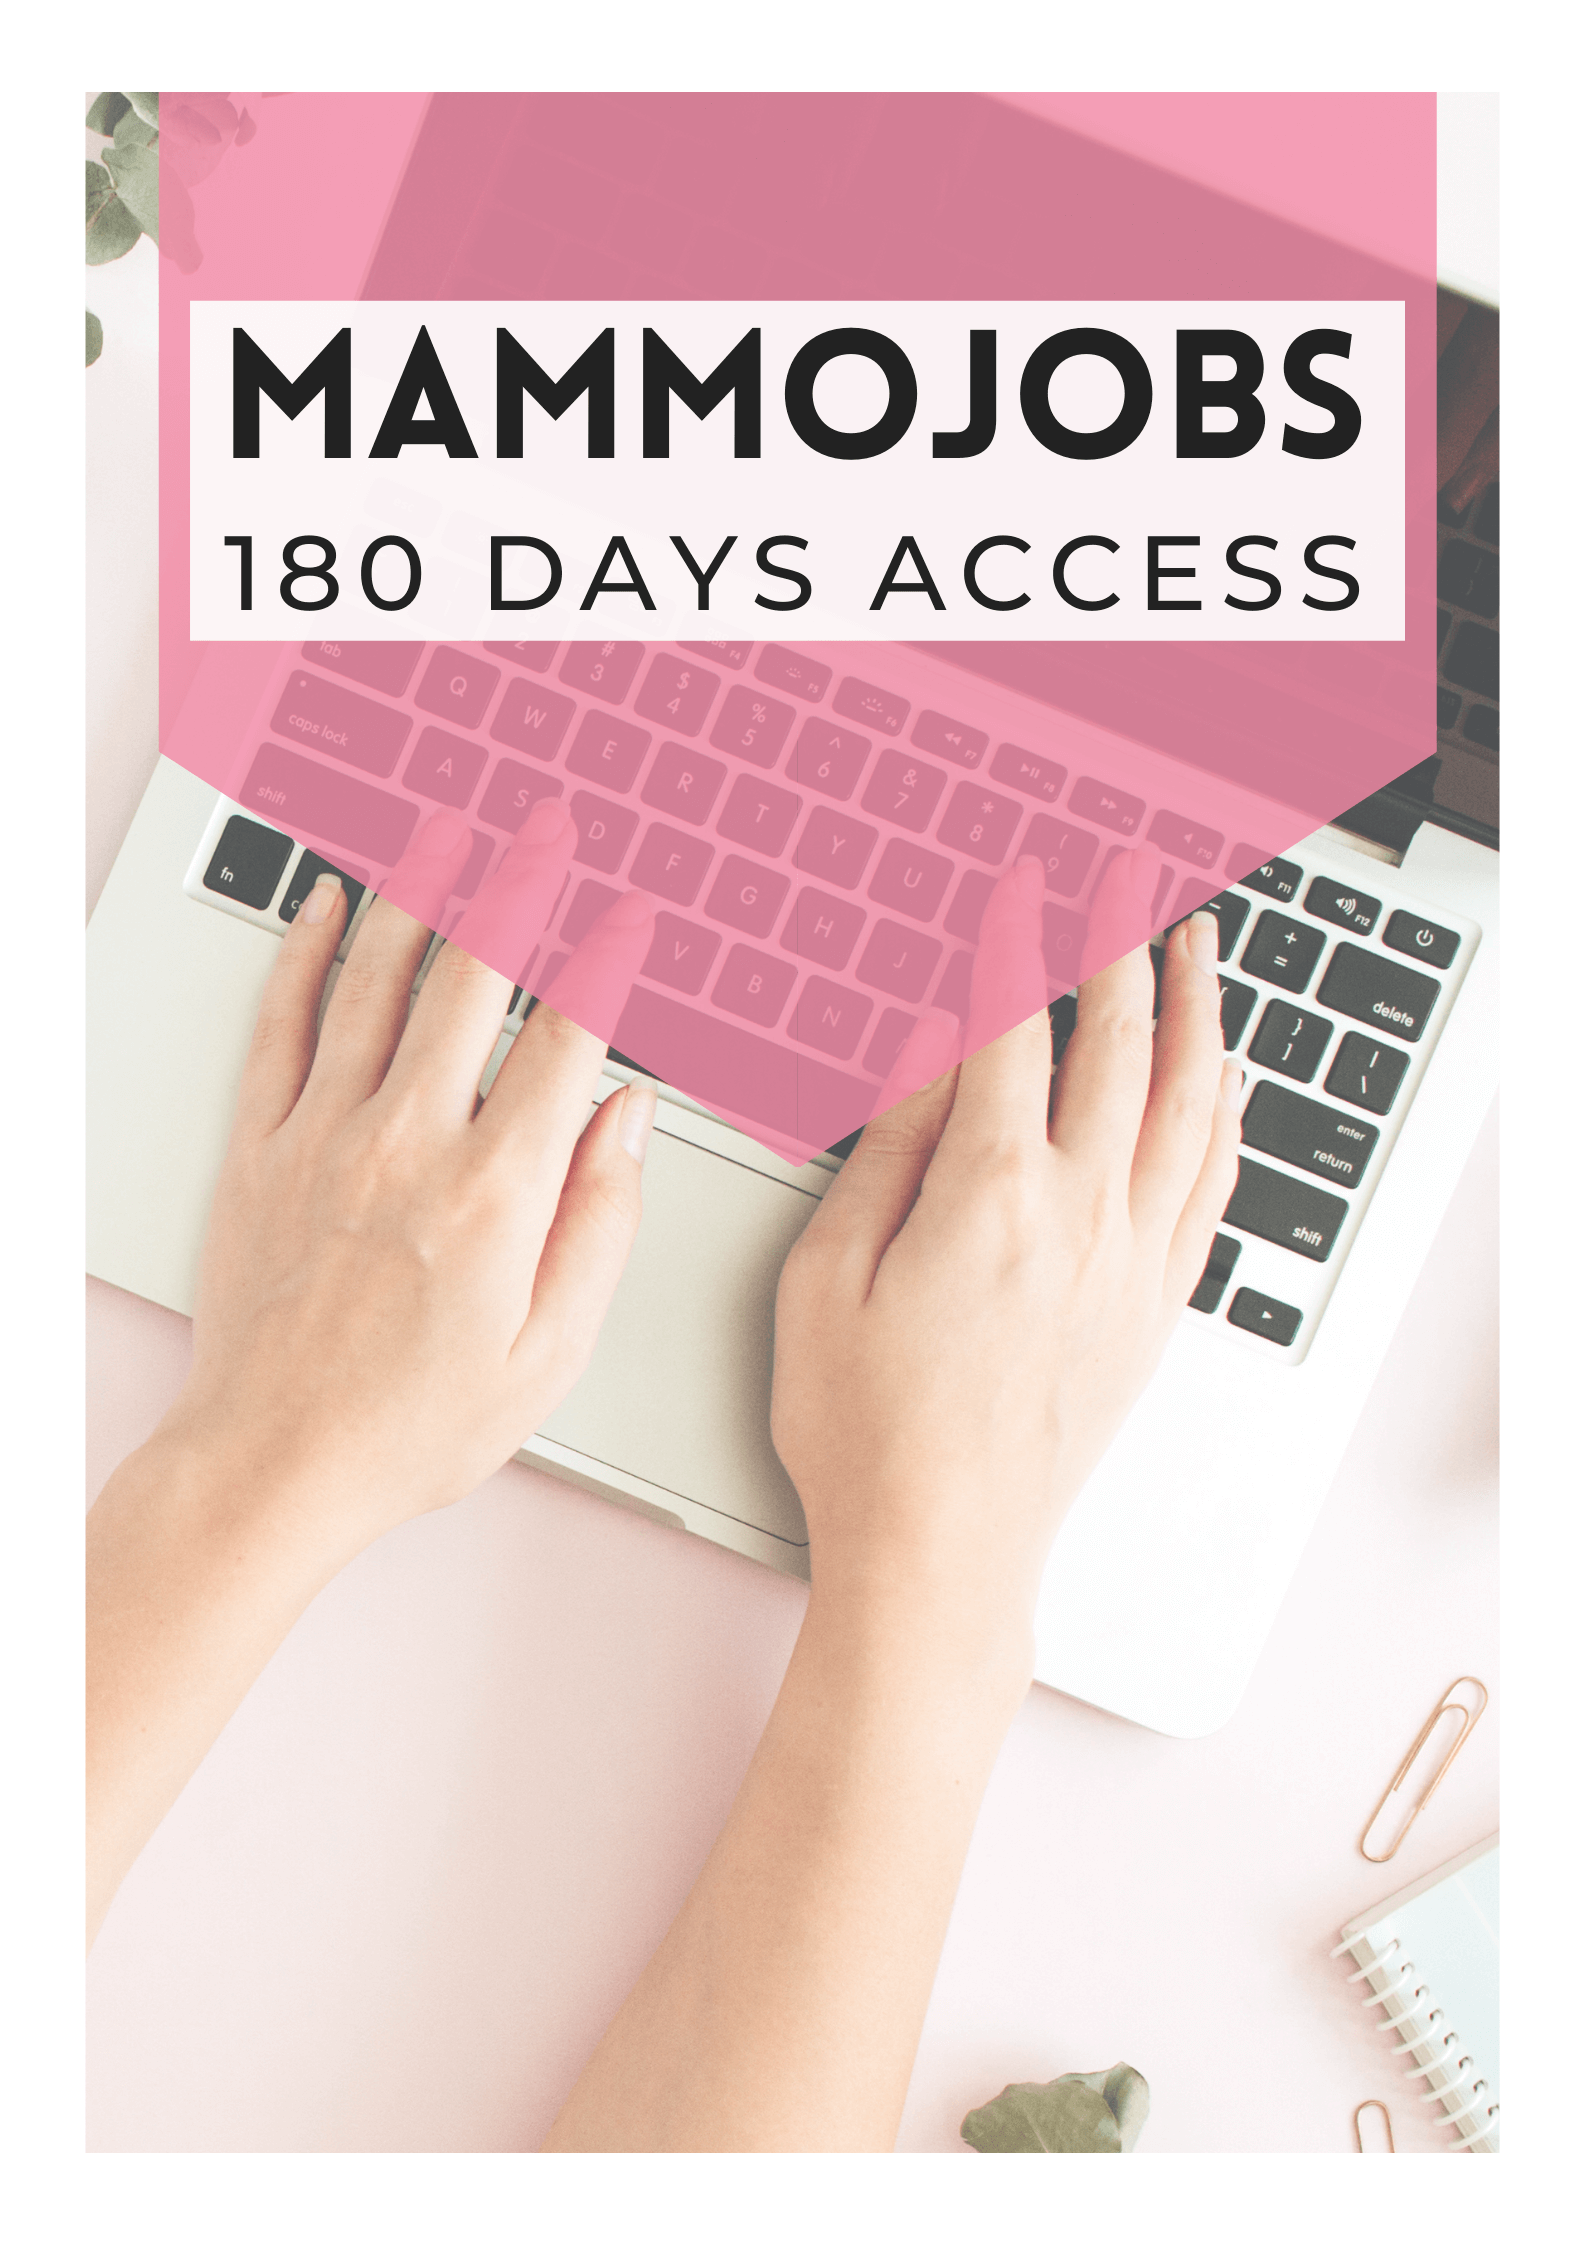 MammoJobs Employer Access - 180 Days